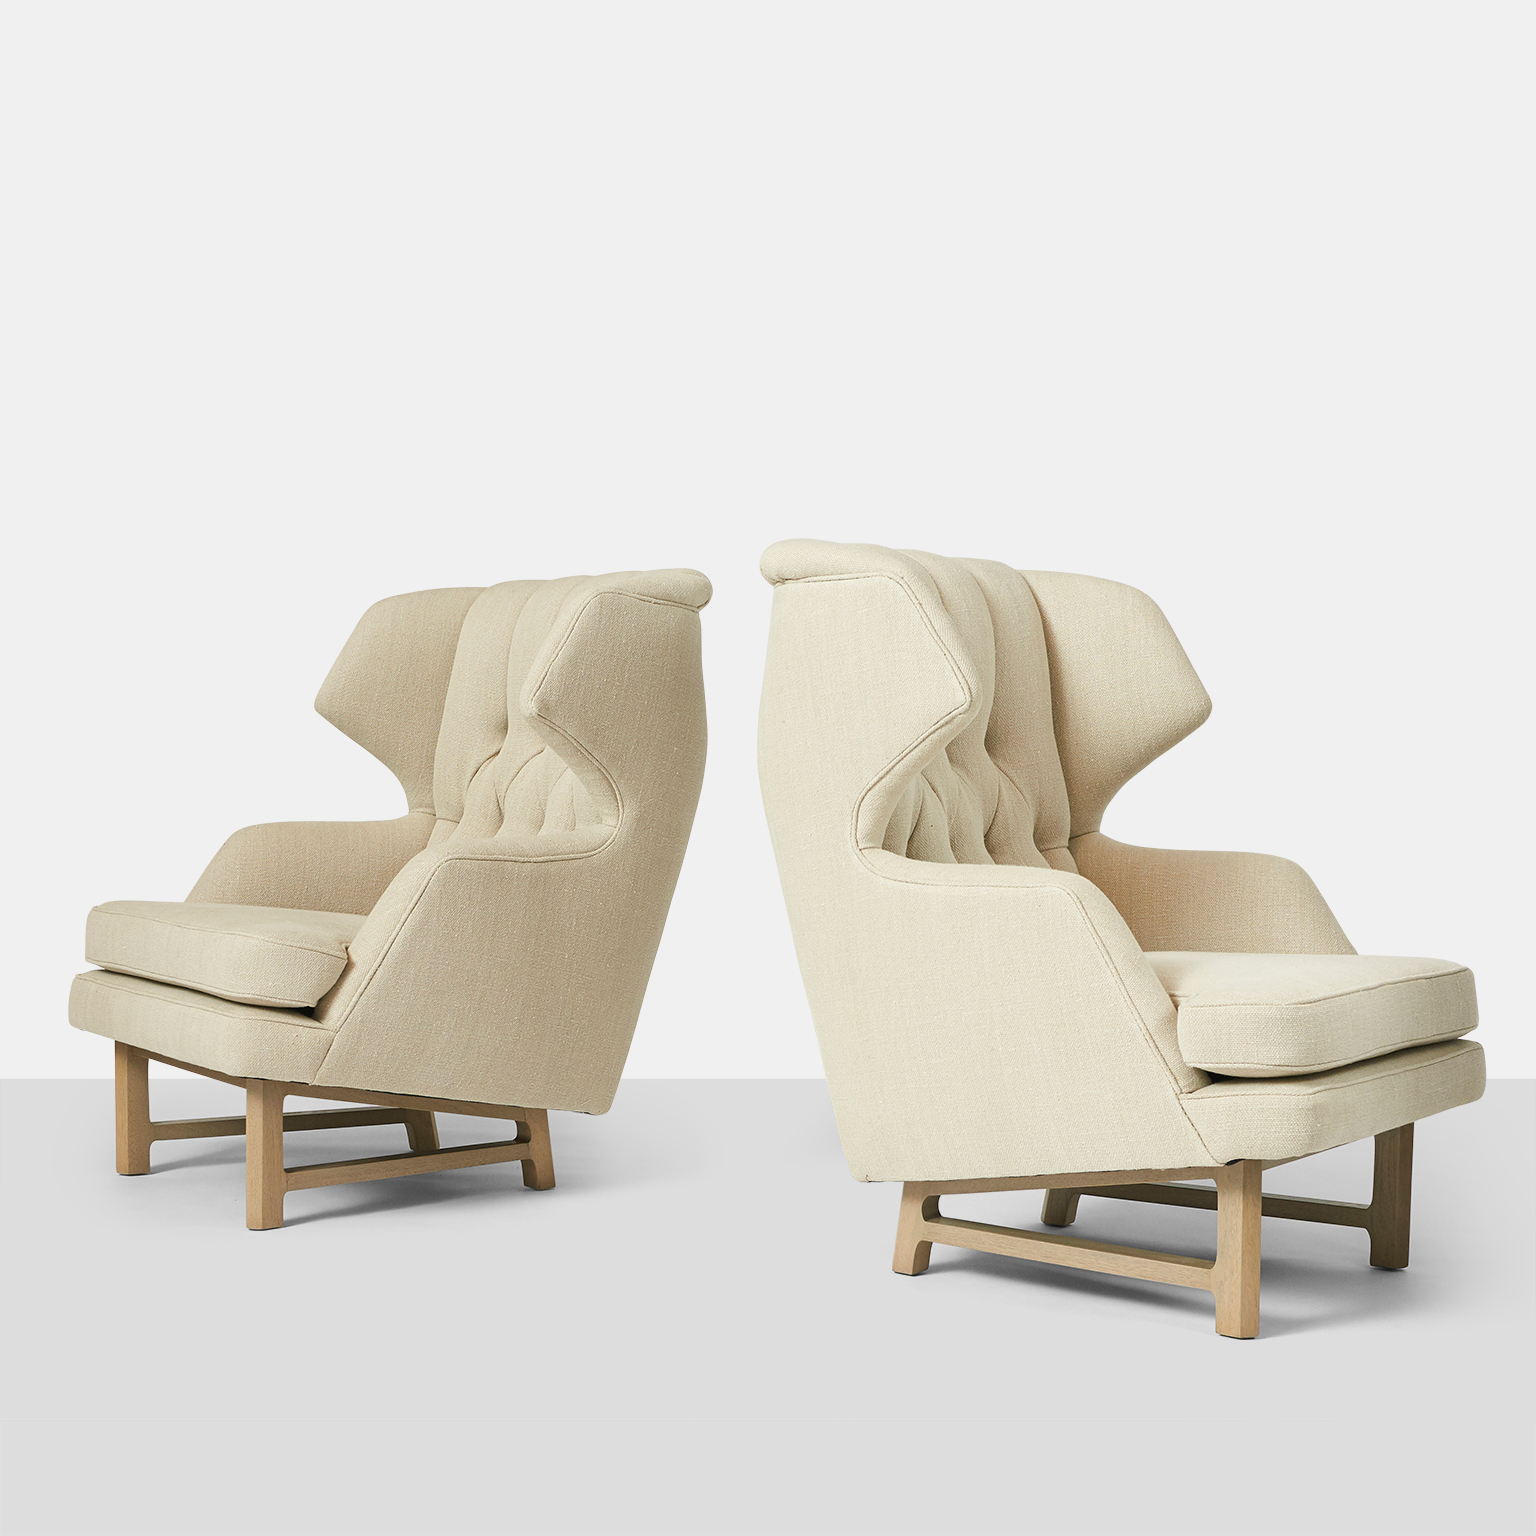 Wormley Chairs